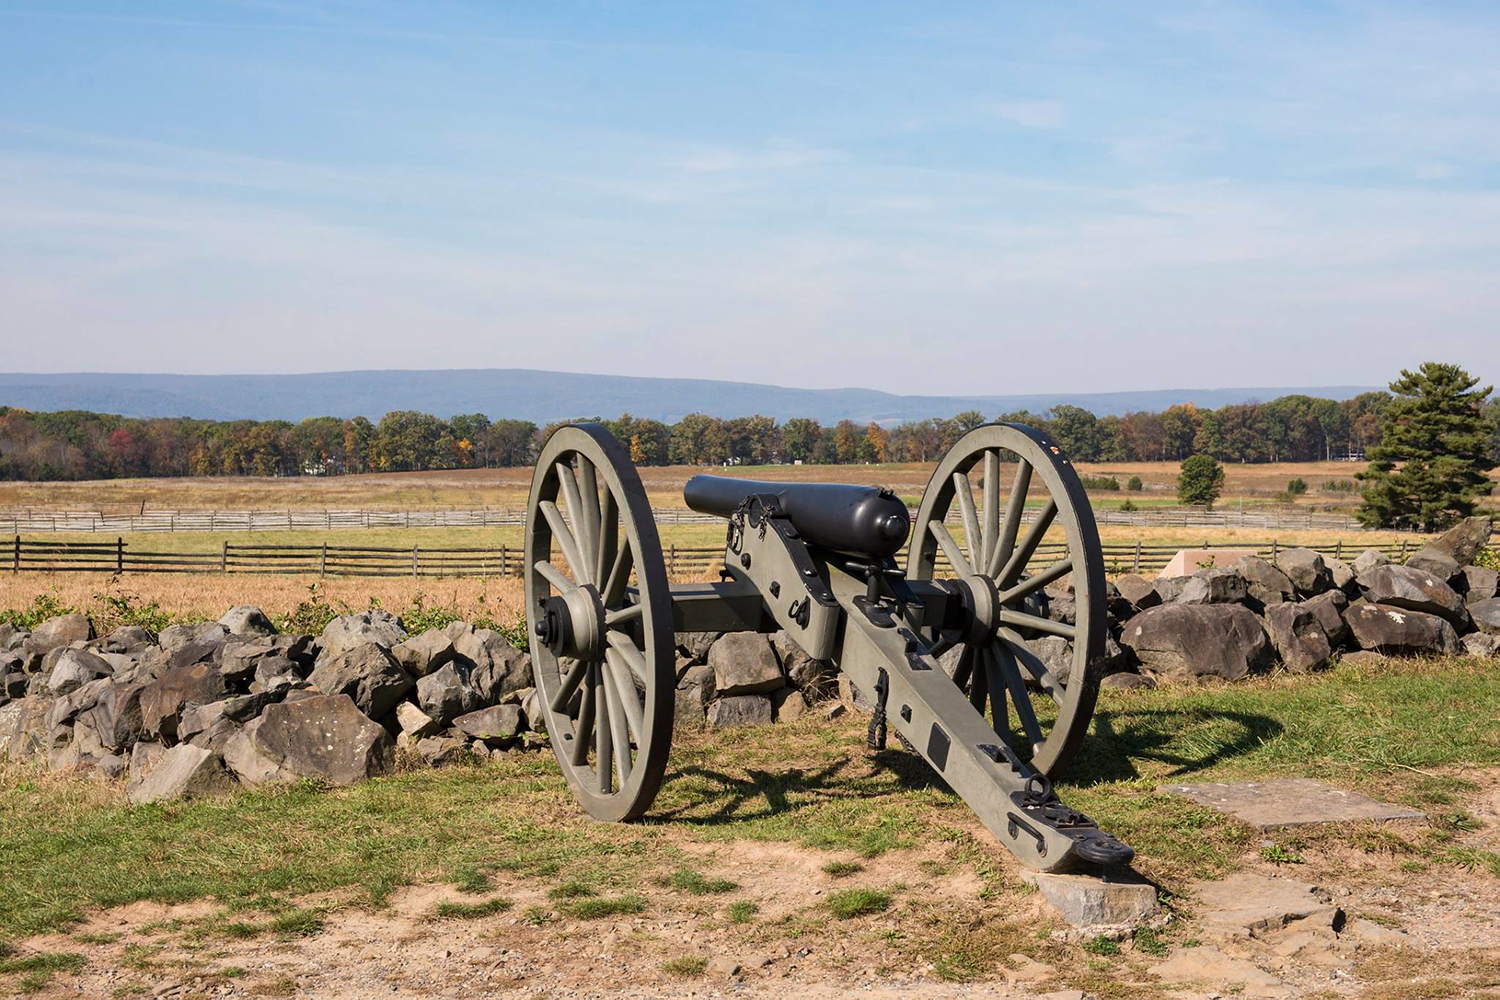 gettysburg tours today